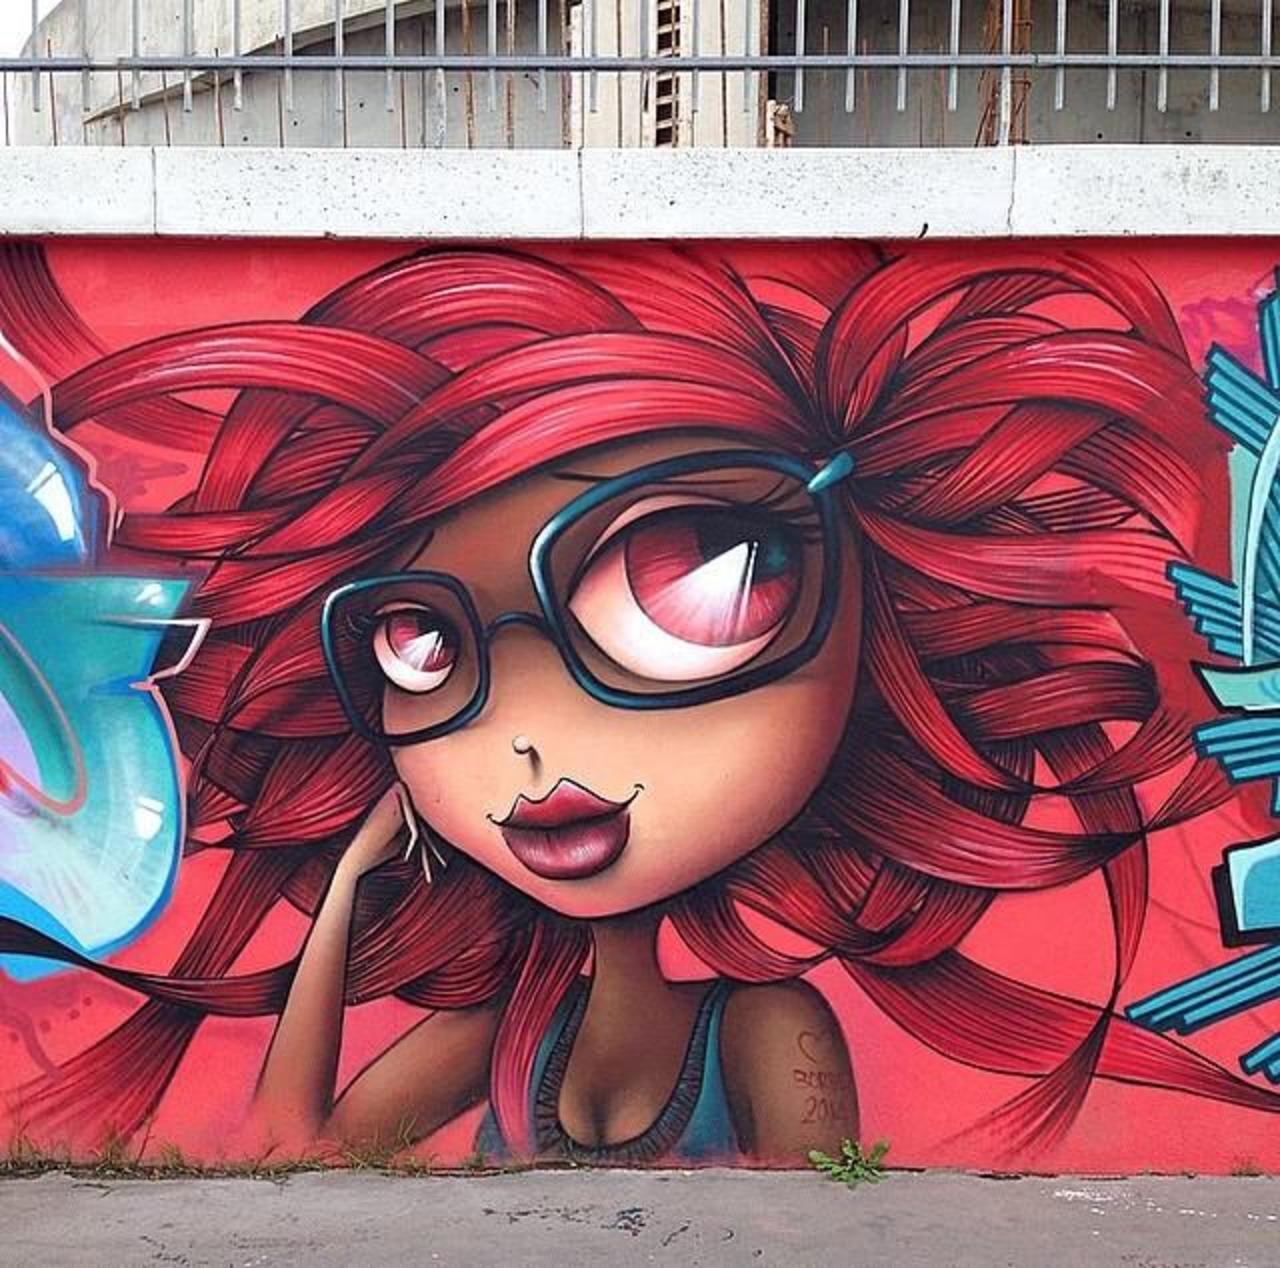 ❤️ // RT @GoogleStreetArt: Wonderful Street Art mural by @VinieGraffiti

#art #graffiti #streetart http://t.co/6ziRcx8AM9